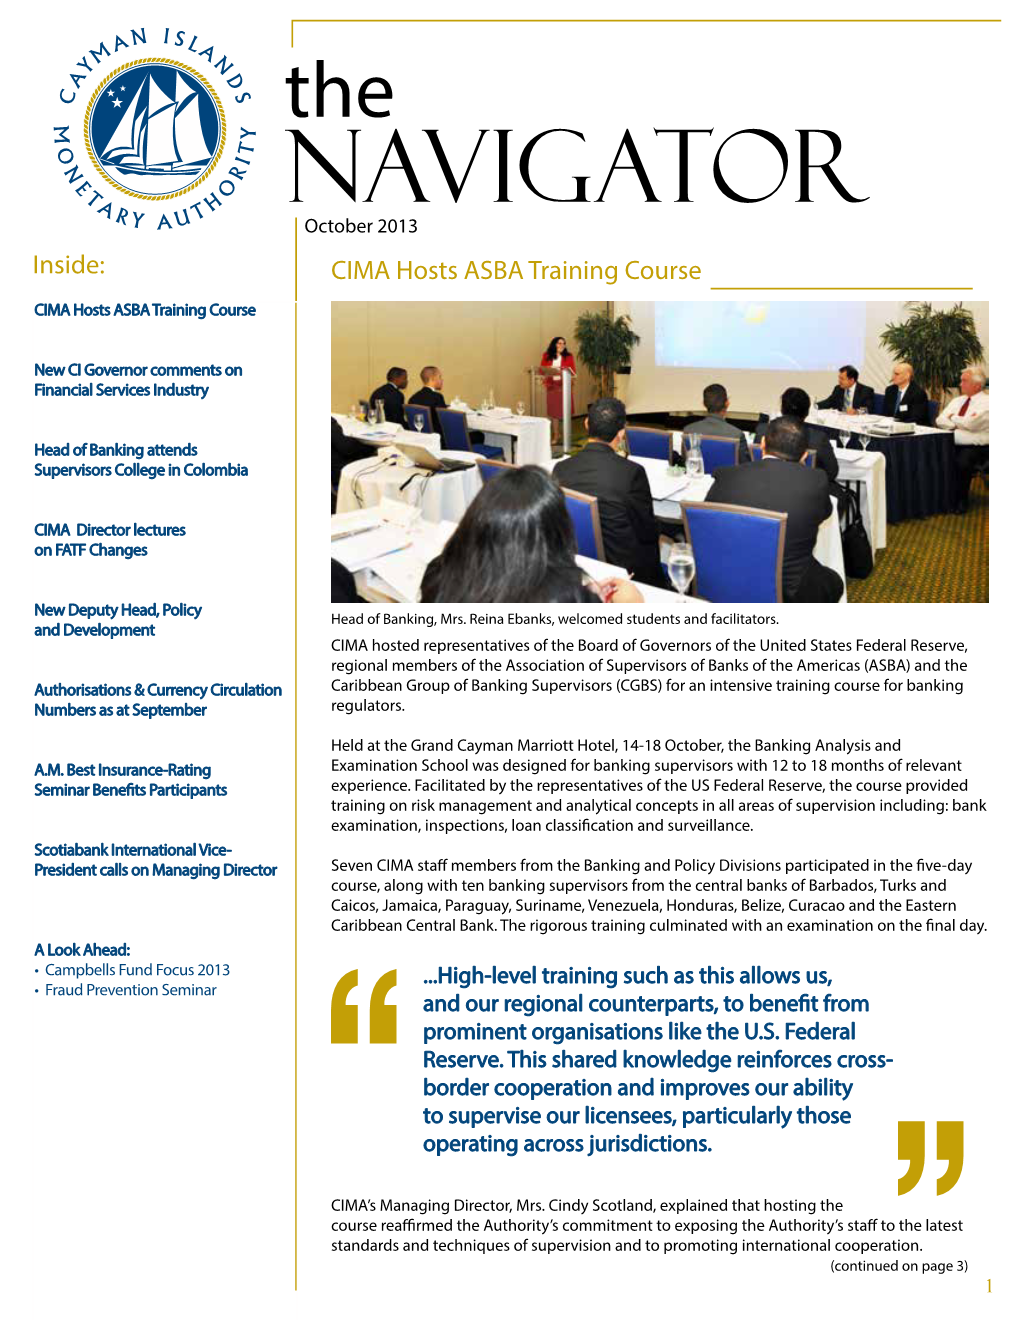 The Navigator October 2013 Inside: CIMA Hosts ASBA Training Course